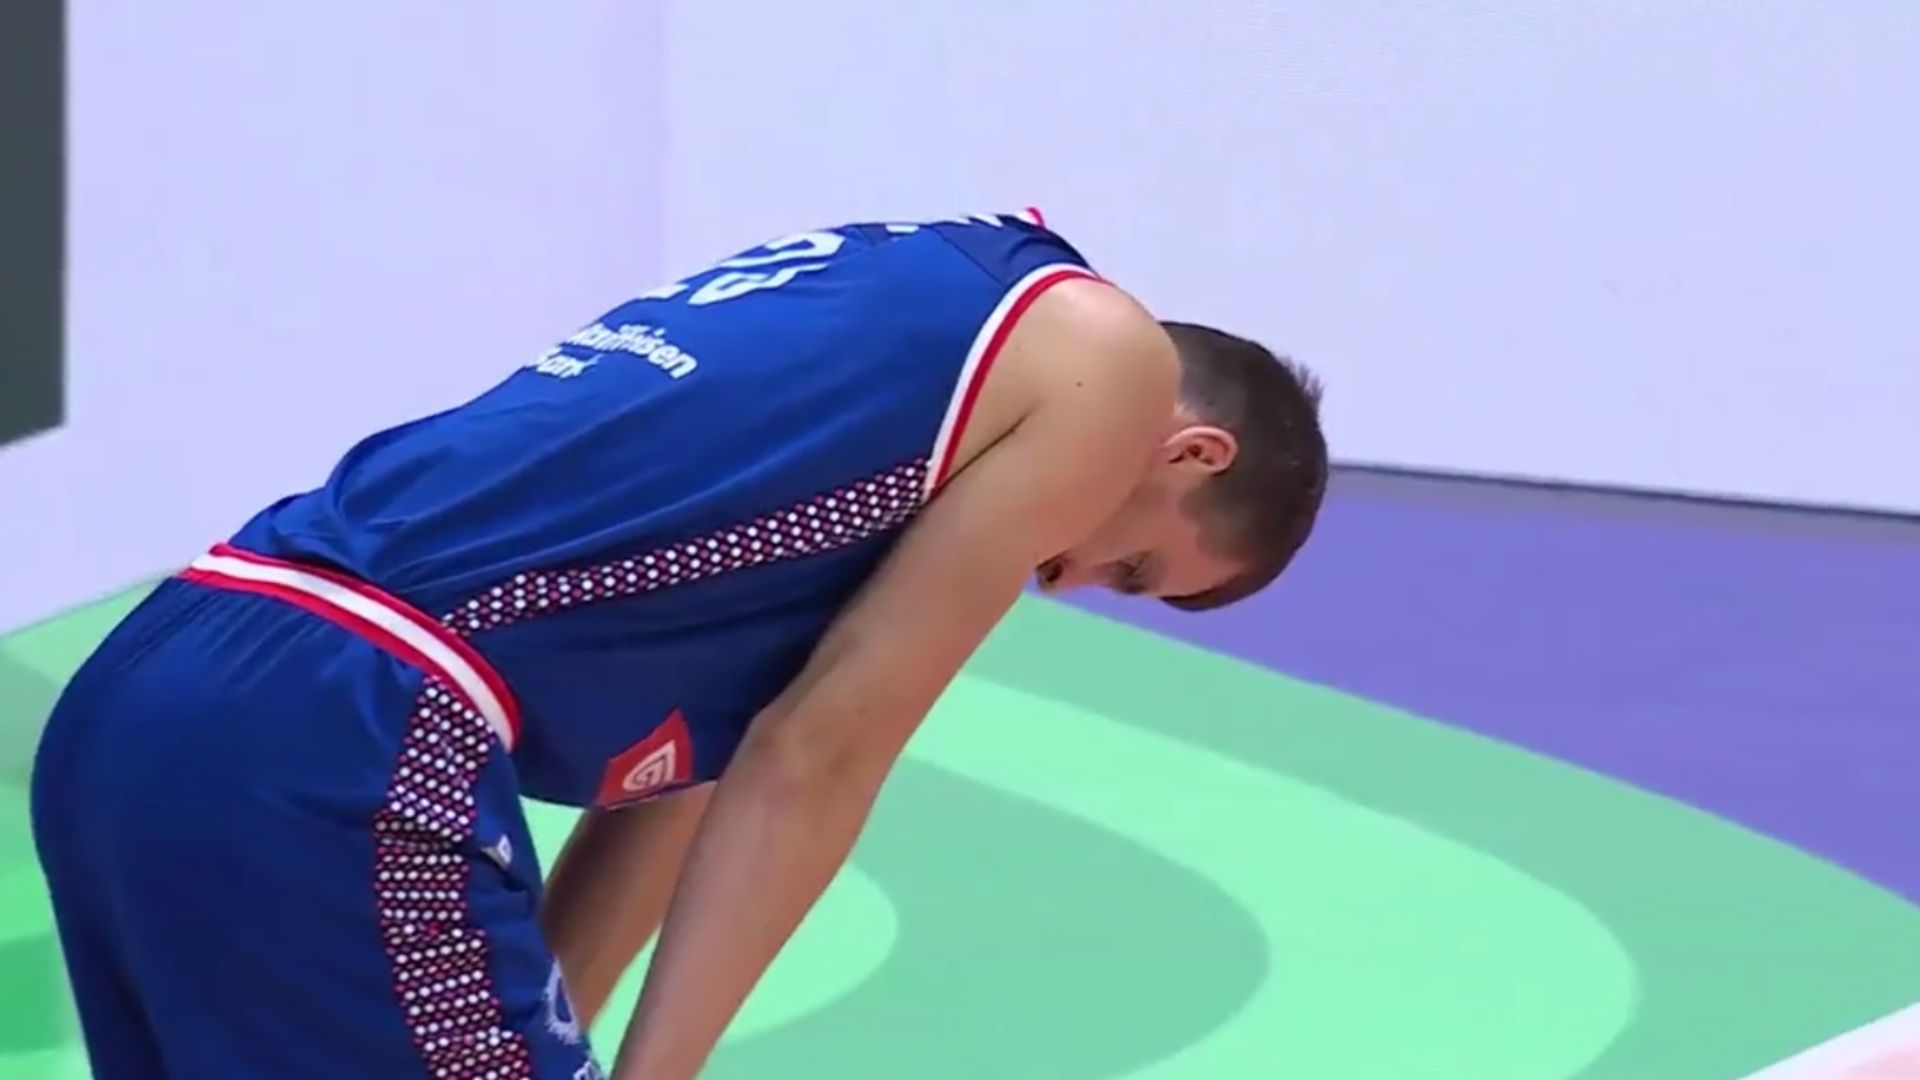 VÍDEO: Atleta perde rim após levar cotovelada durante jogo de basquete